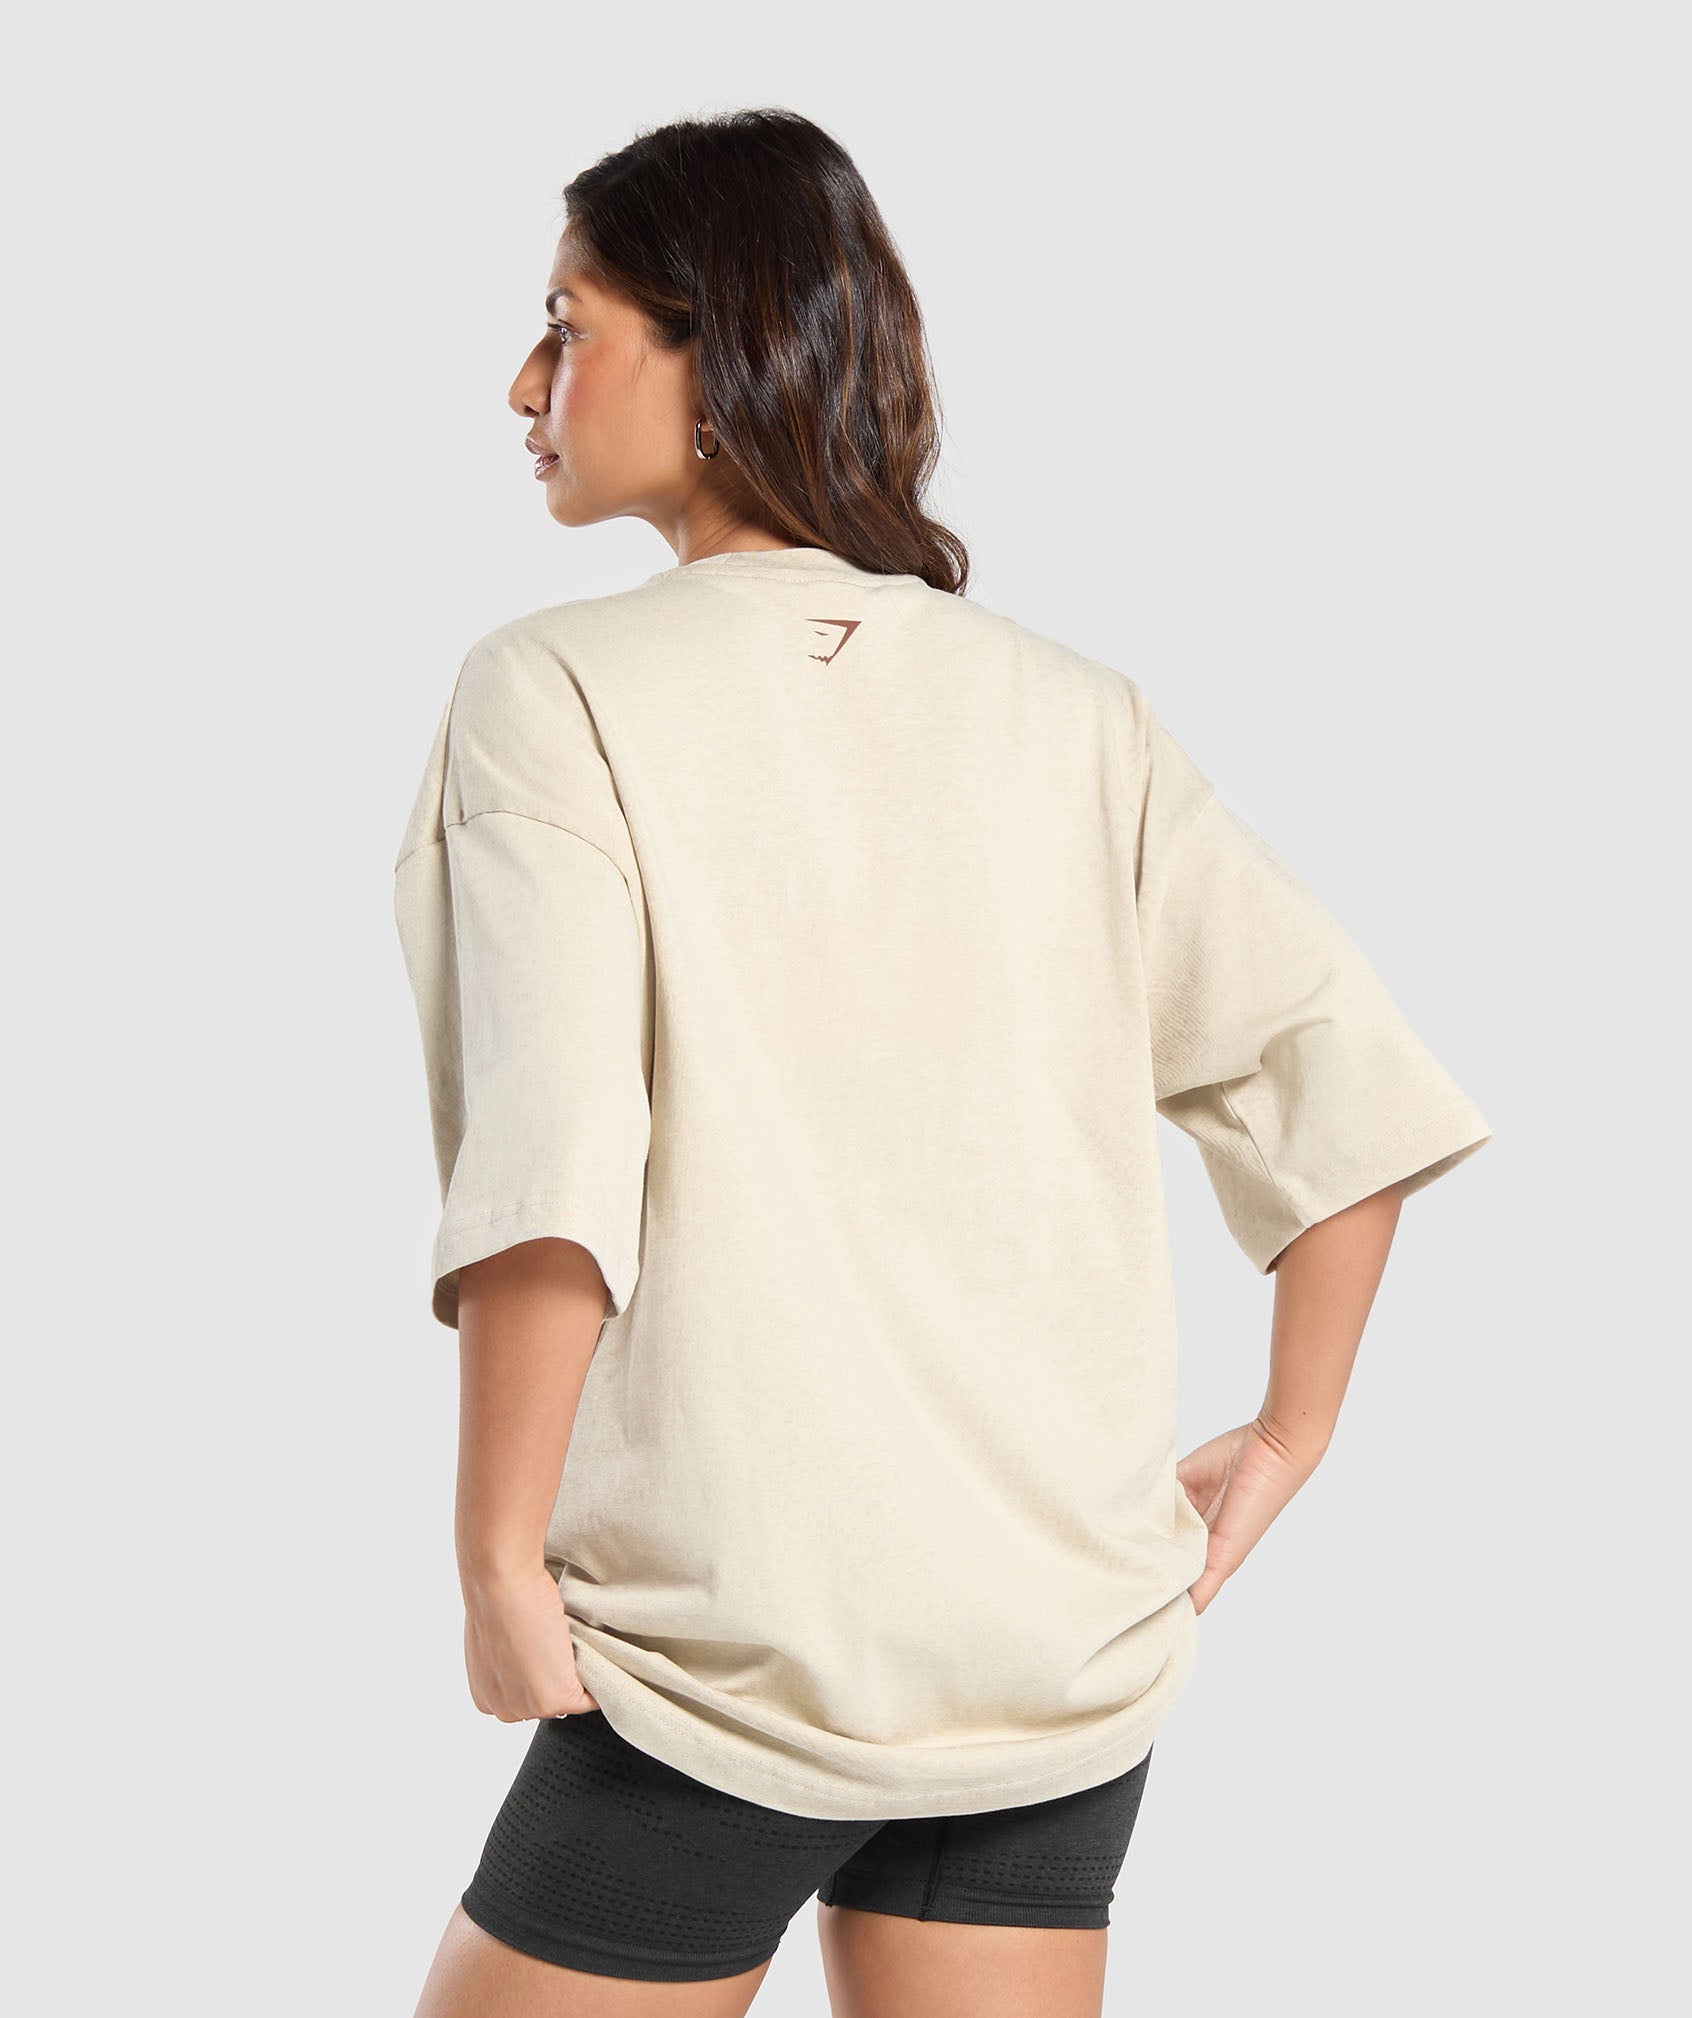 GFX Collegiate Oversized T Shirt in Ecru White - view 2